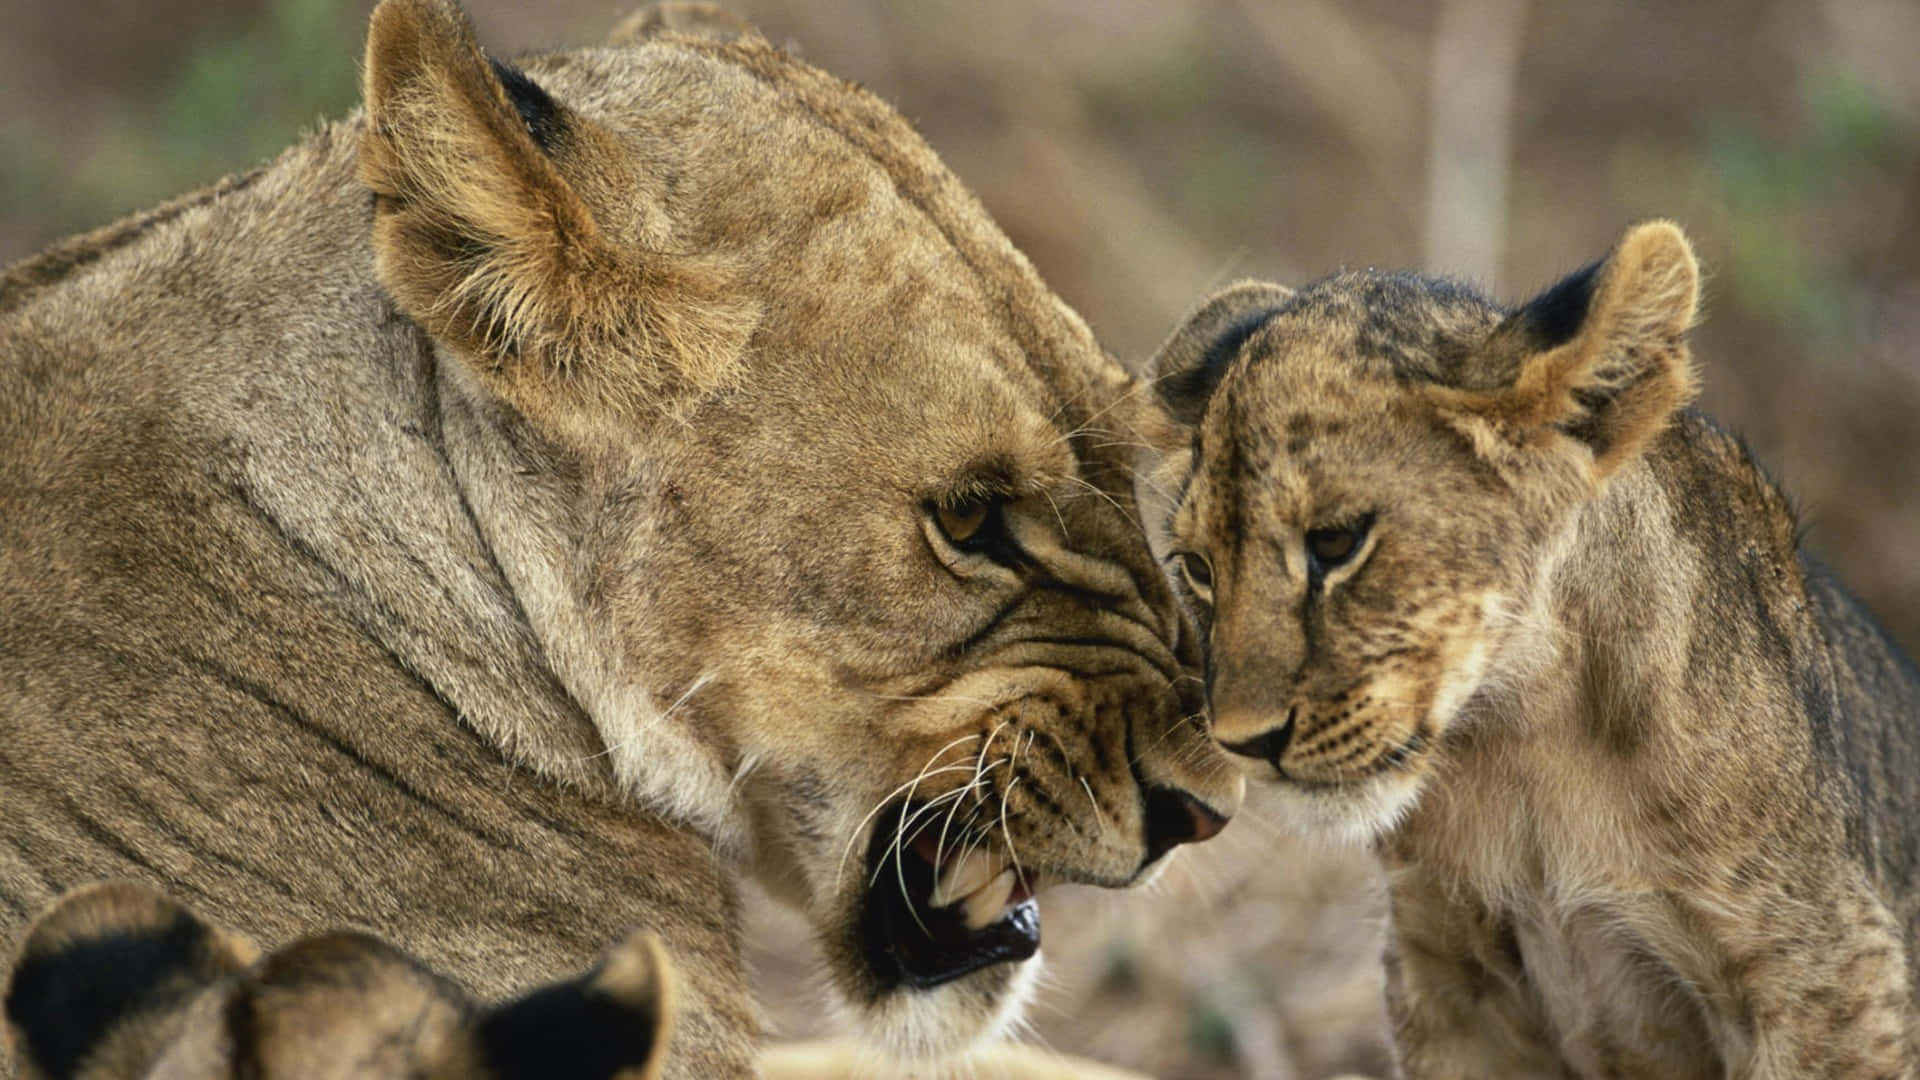 Lionessand Cub Tender Moment Wallpaper